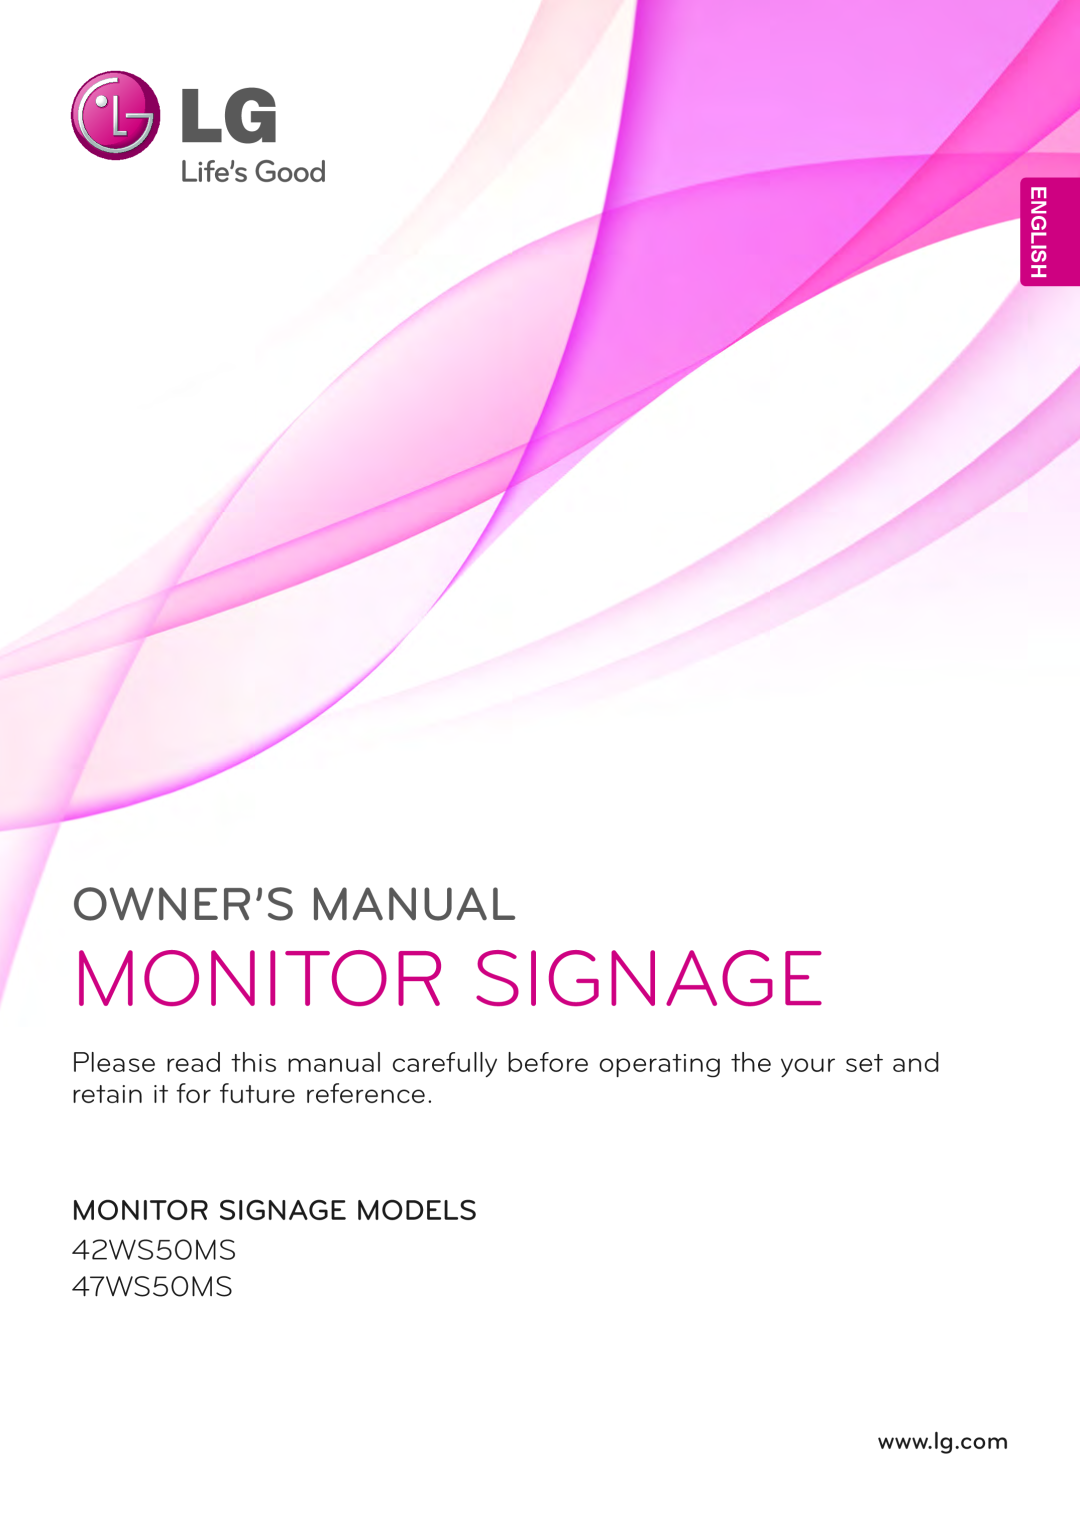 LG Electronics owner manual English, Monitor Signage, MONITOR SIGNAGE MODELS 42WS50MS 47WS50MS 